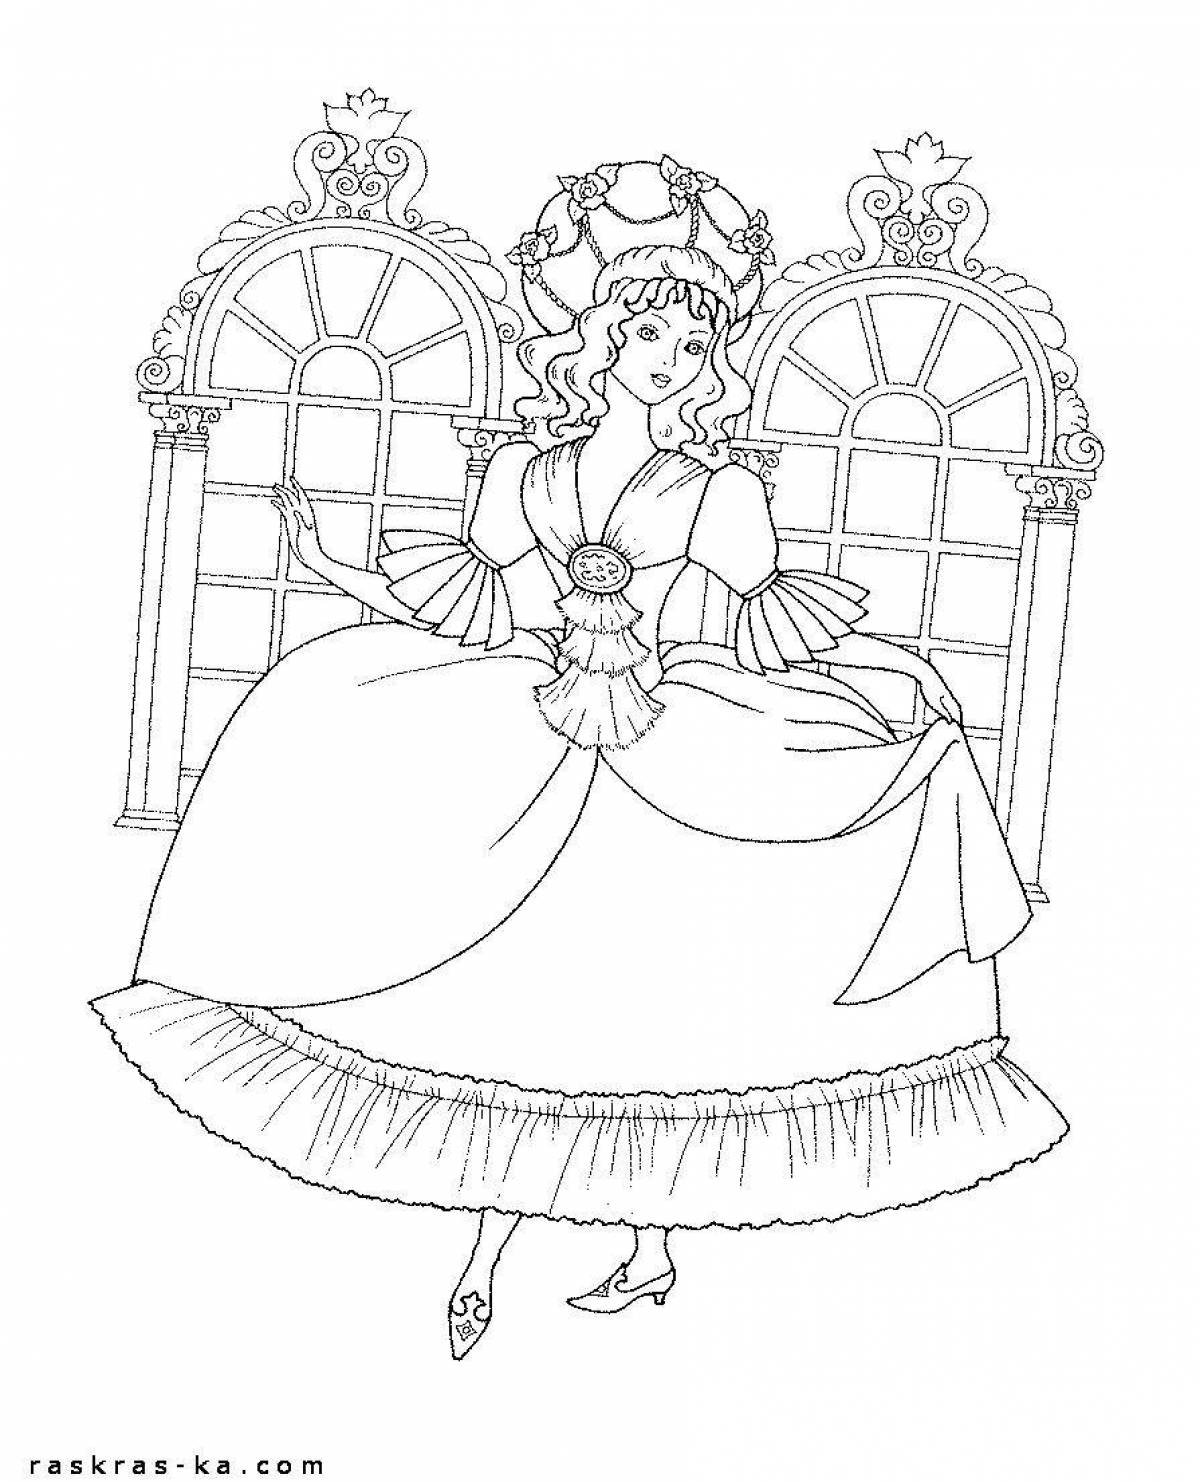 Рисунок одежды бал во дворце. Принцесса. Раскраска. Раскраска. Бал принцессы. Разукрашки с принцессами на балу.